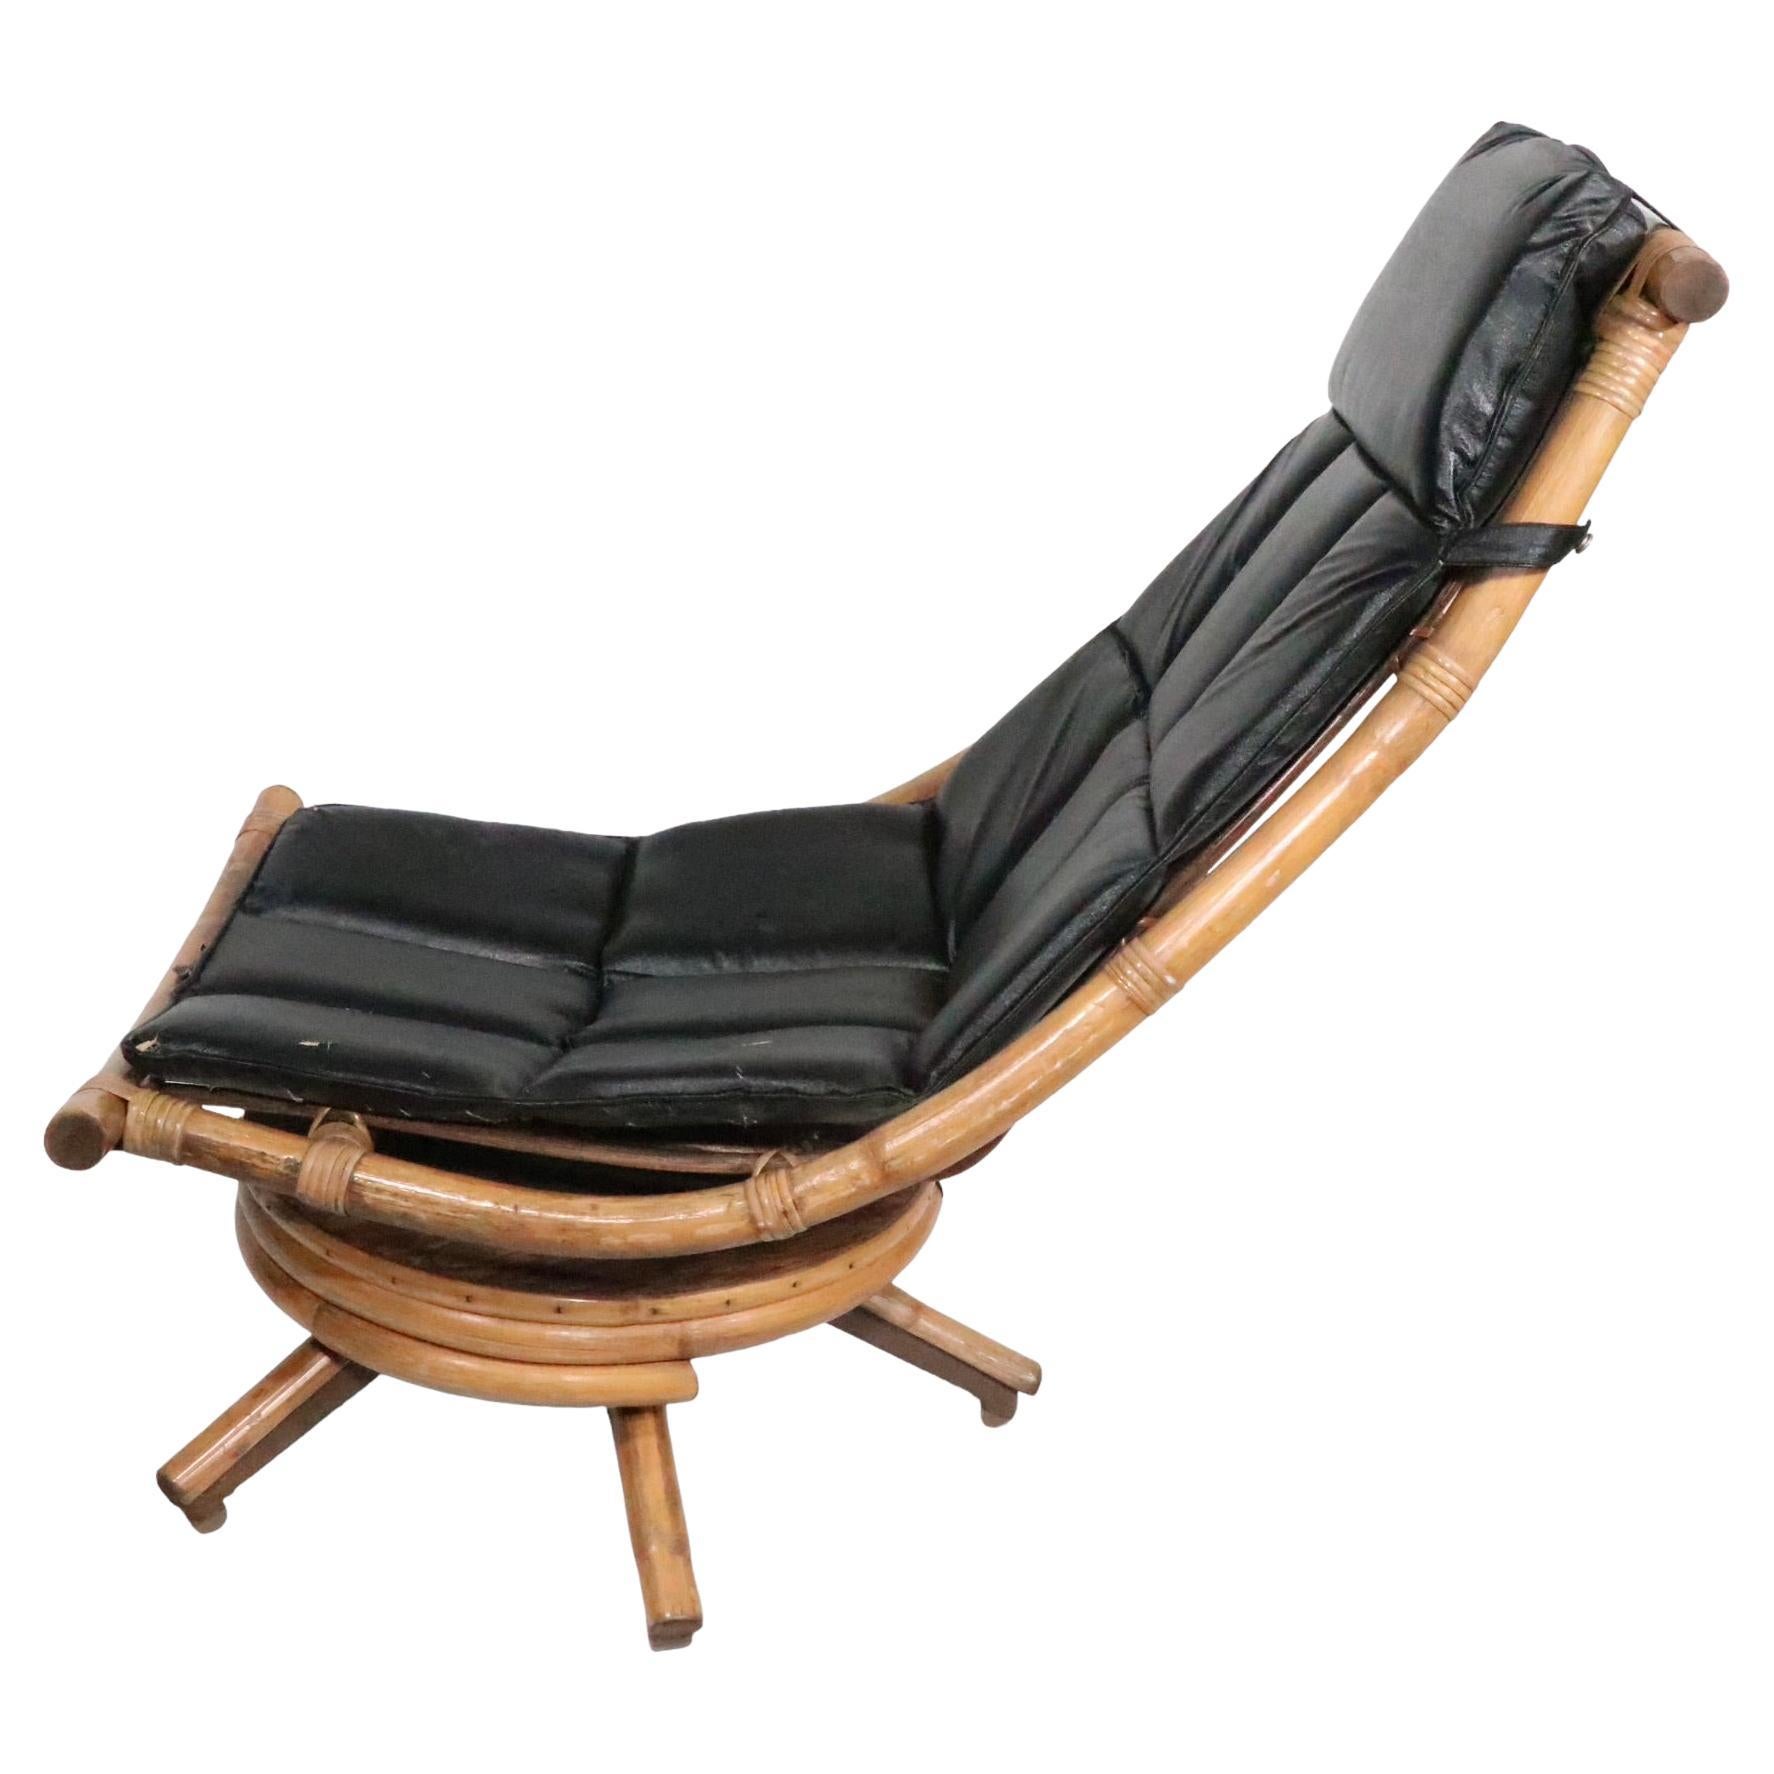 https://a.1stdibscdn.com/mid-century-swivel-tilt-bamboo-lounge-chaise-chair-c-1950-1960s-for-sale/f_9787/f_344073621684796315689/f_34407362_1684796316213_bg_processed.jpg